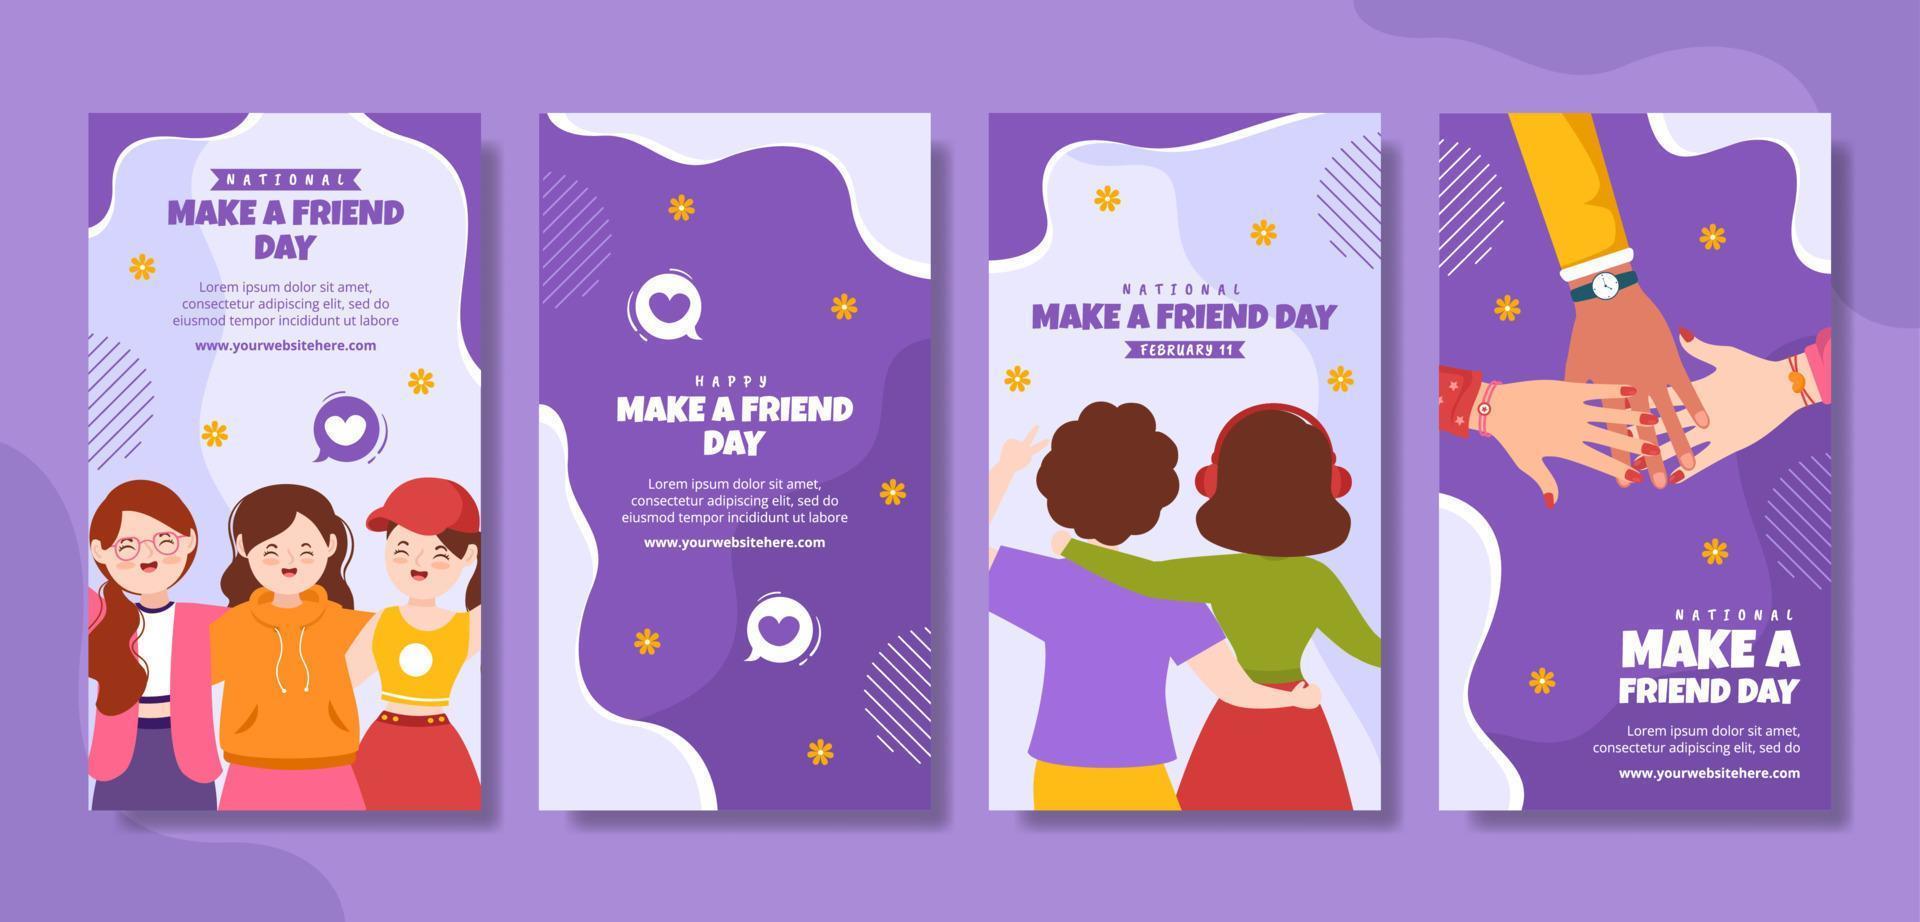 National Make a Friend Day Social Media Stories Flat Cartoon Hand Drawn Templates Illustration vector